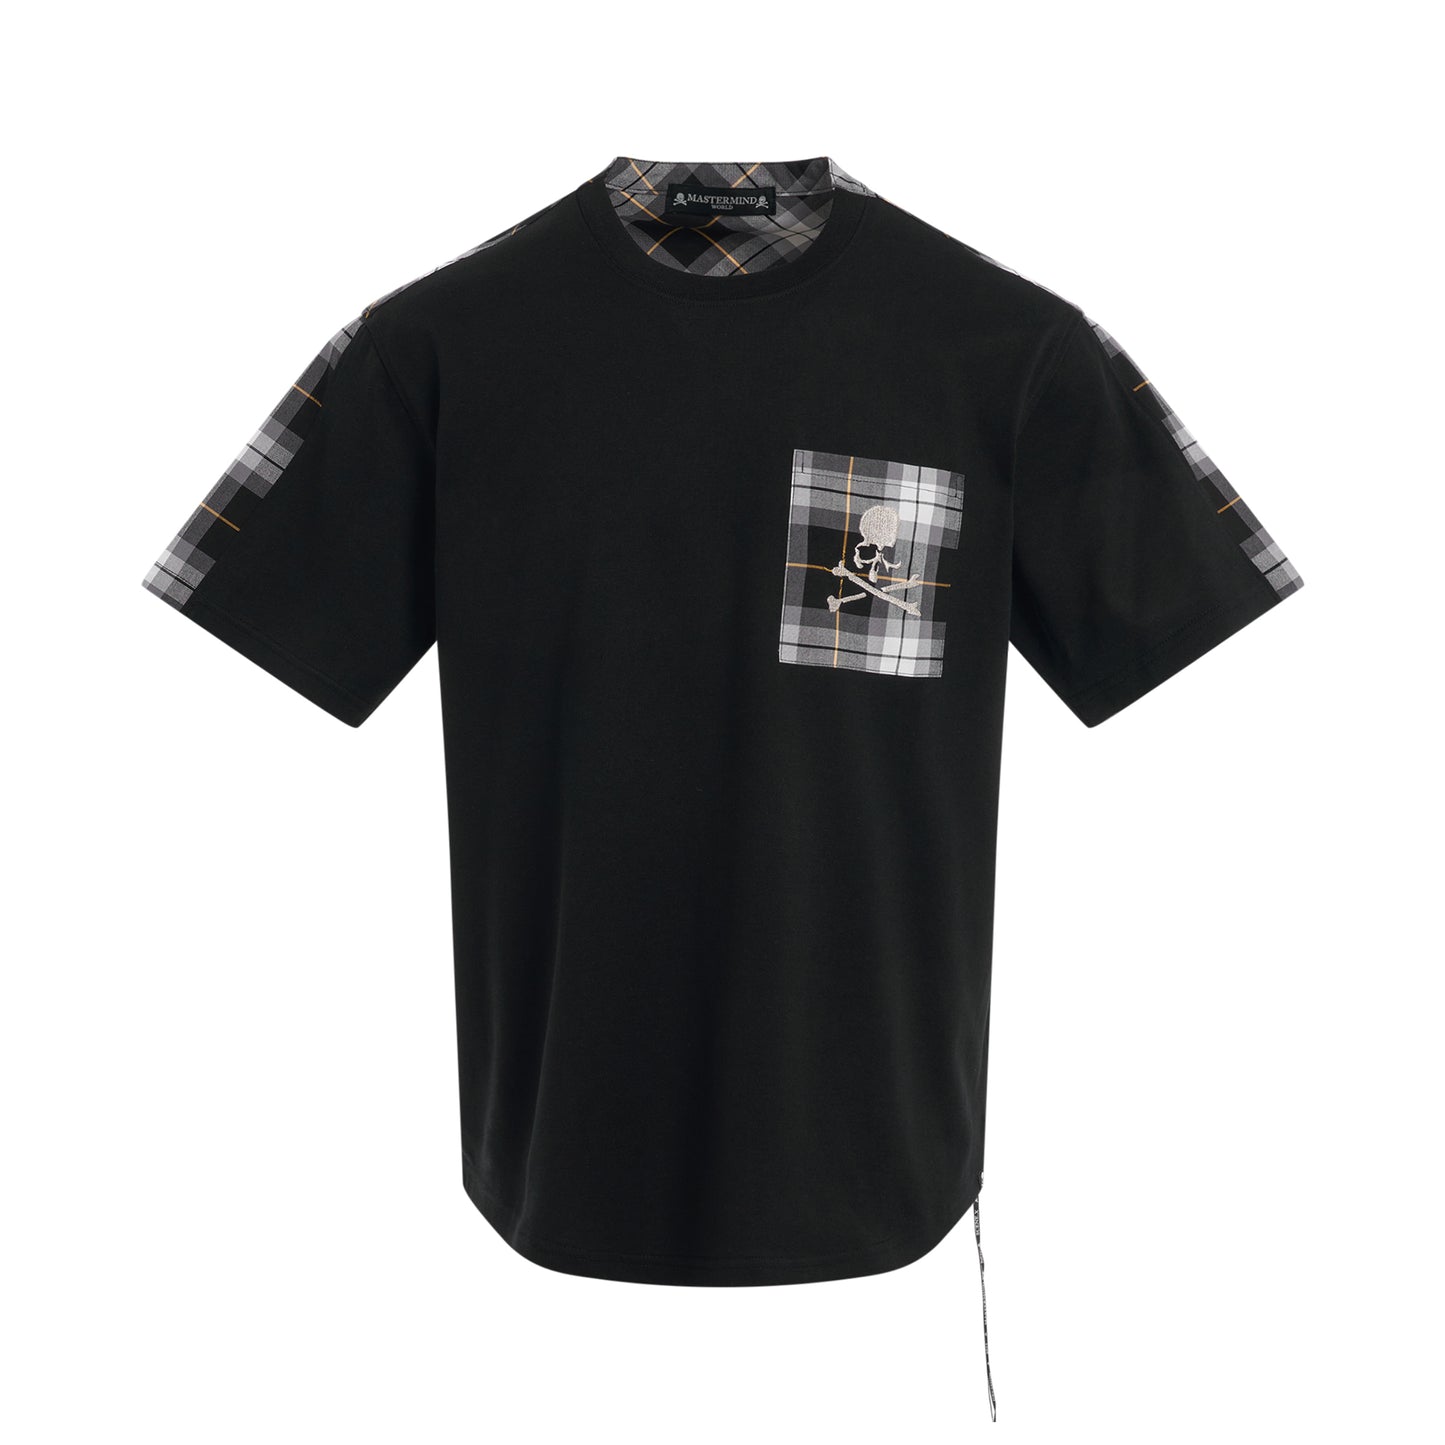 2 Colour Plaid T-Shirt in Black